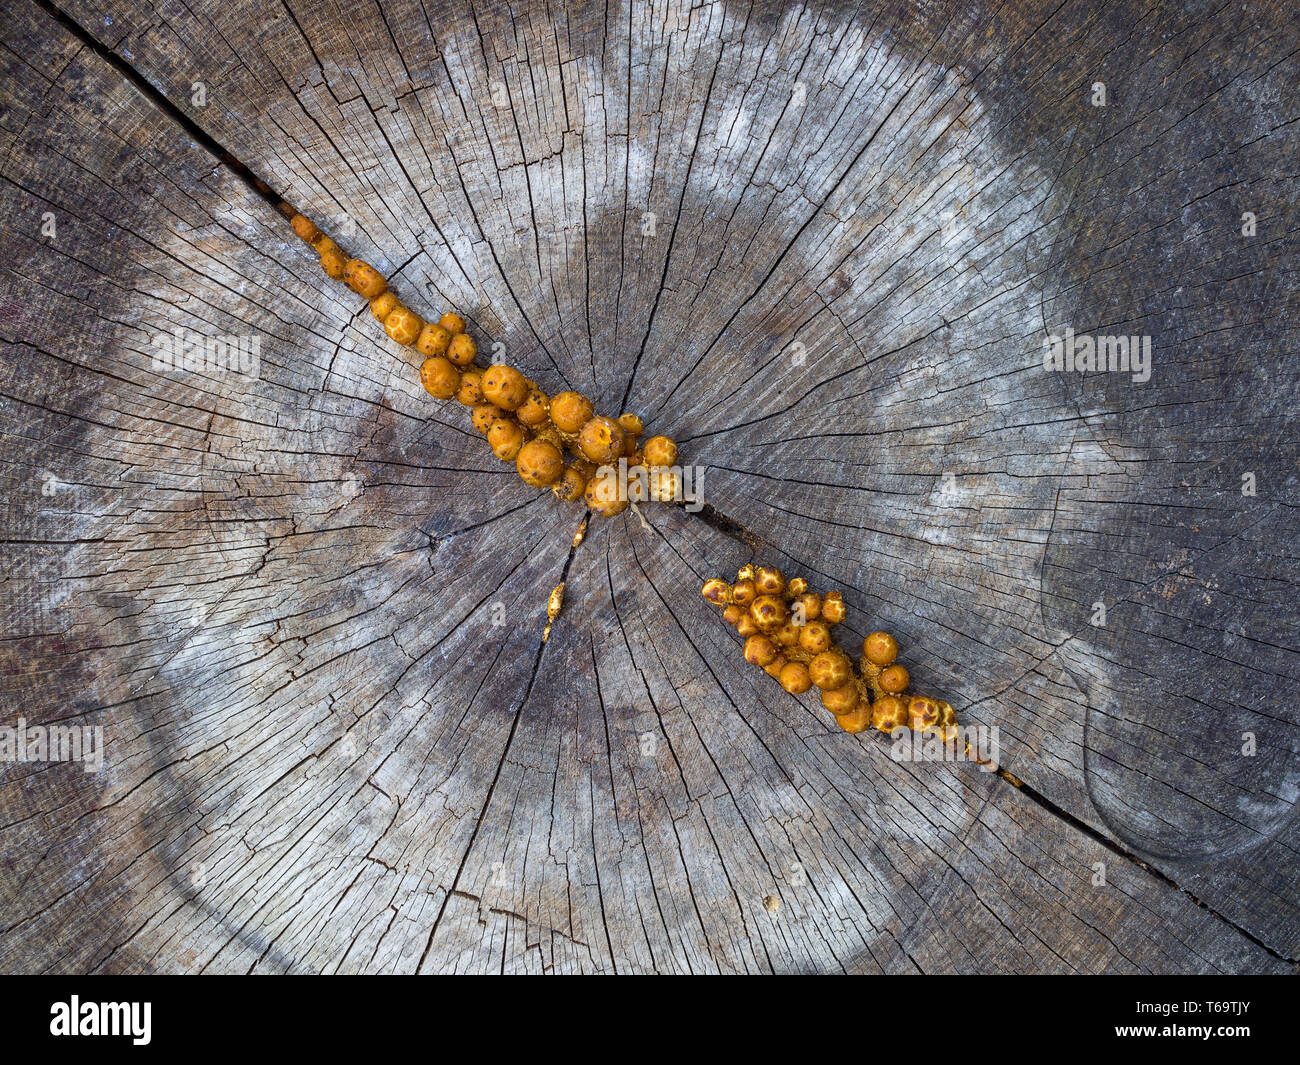 Honey fungus, Armillaria Stock Photo